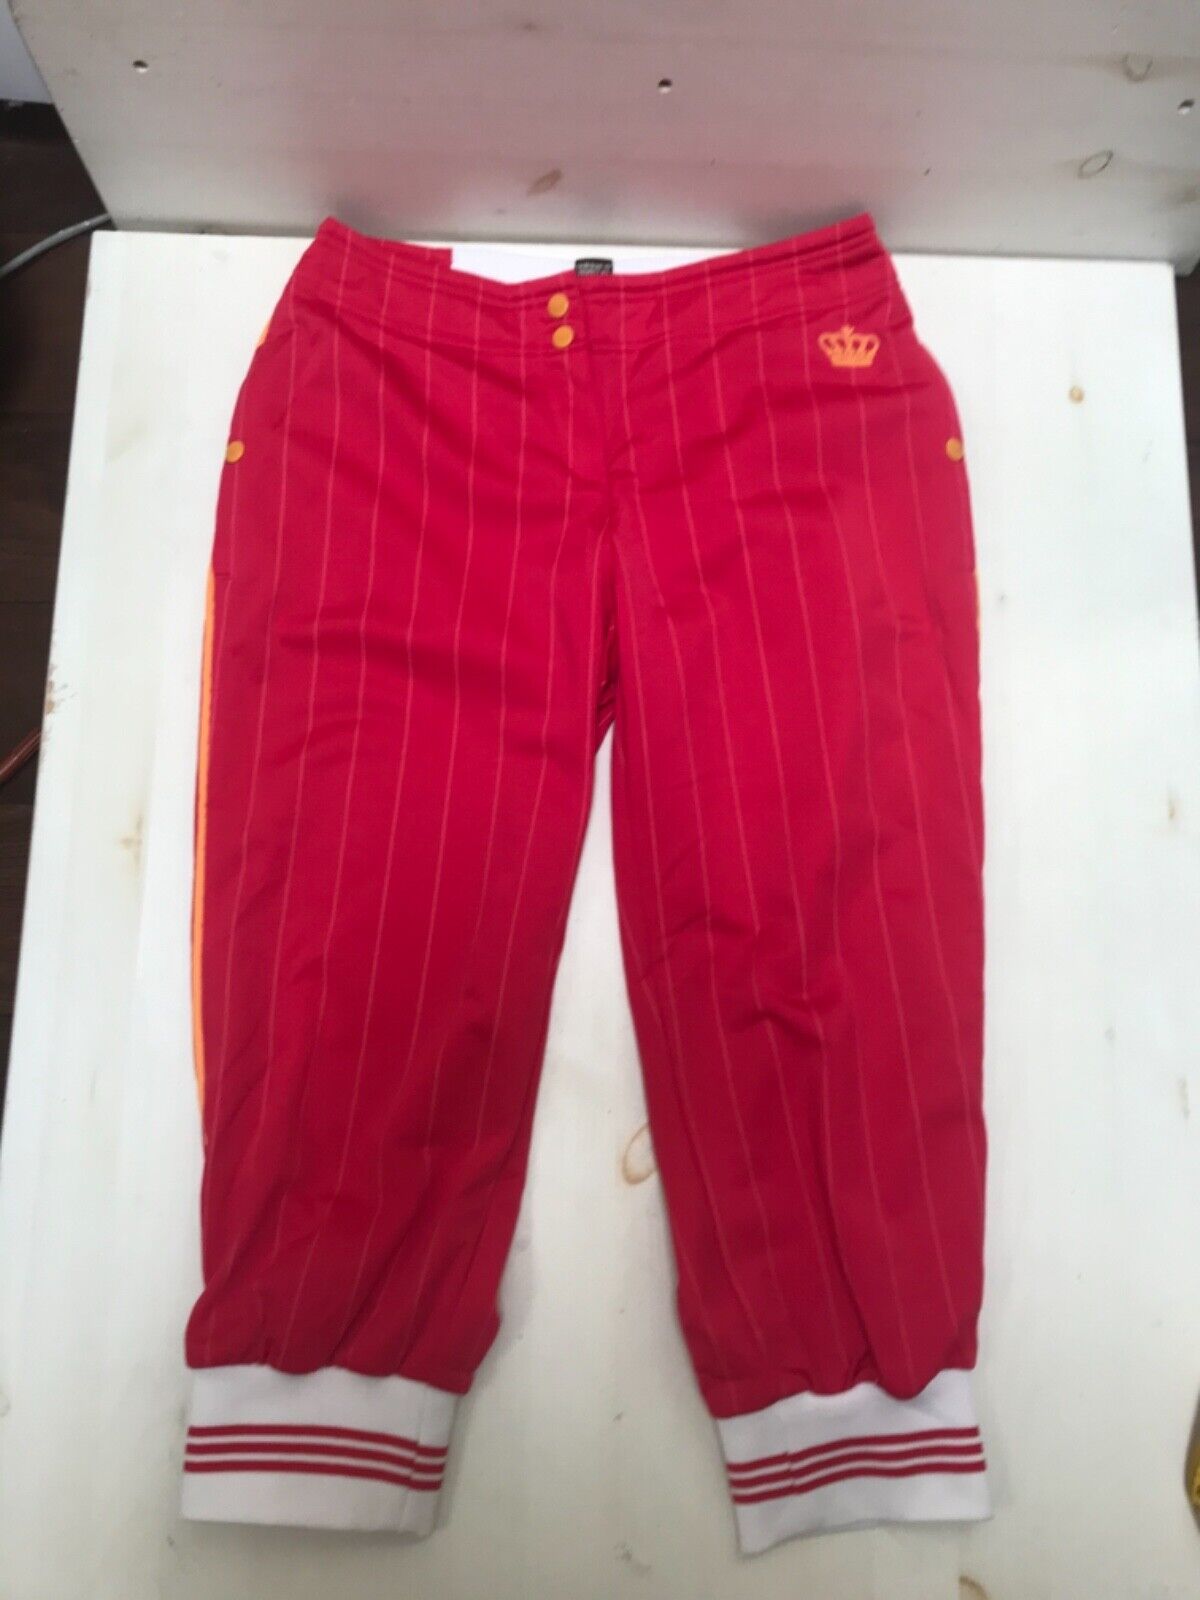 Terrible estafador Fanático ADIDAS Respect Me Missy Elliot Collection Pink Crop Pants, size 10, M | eBay